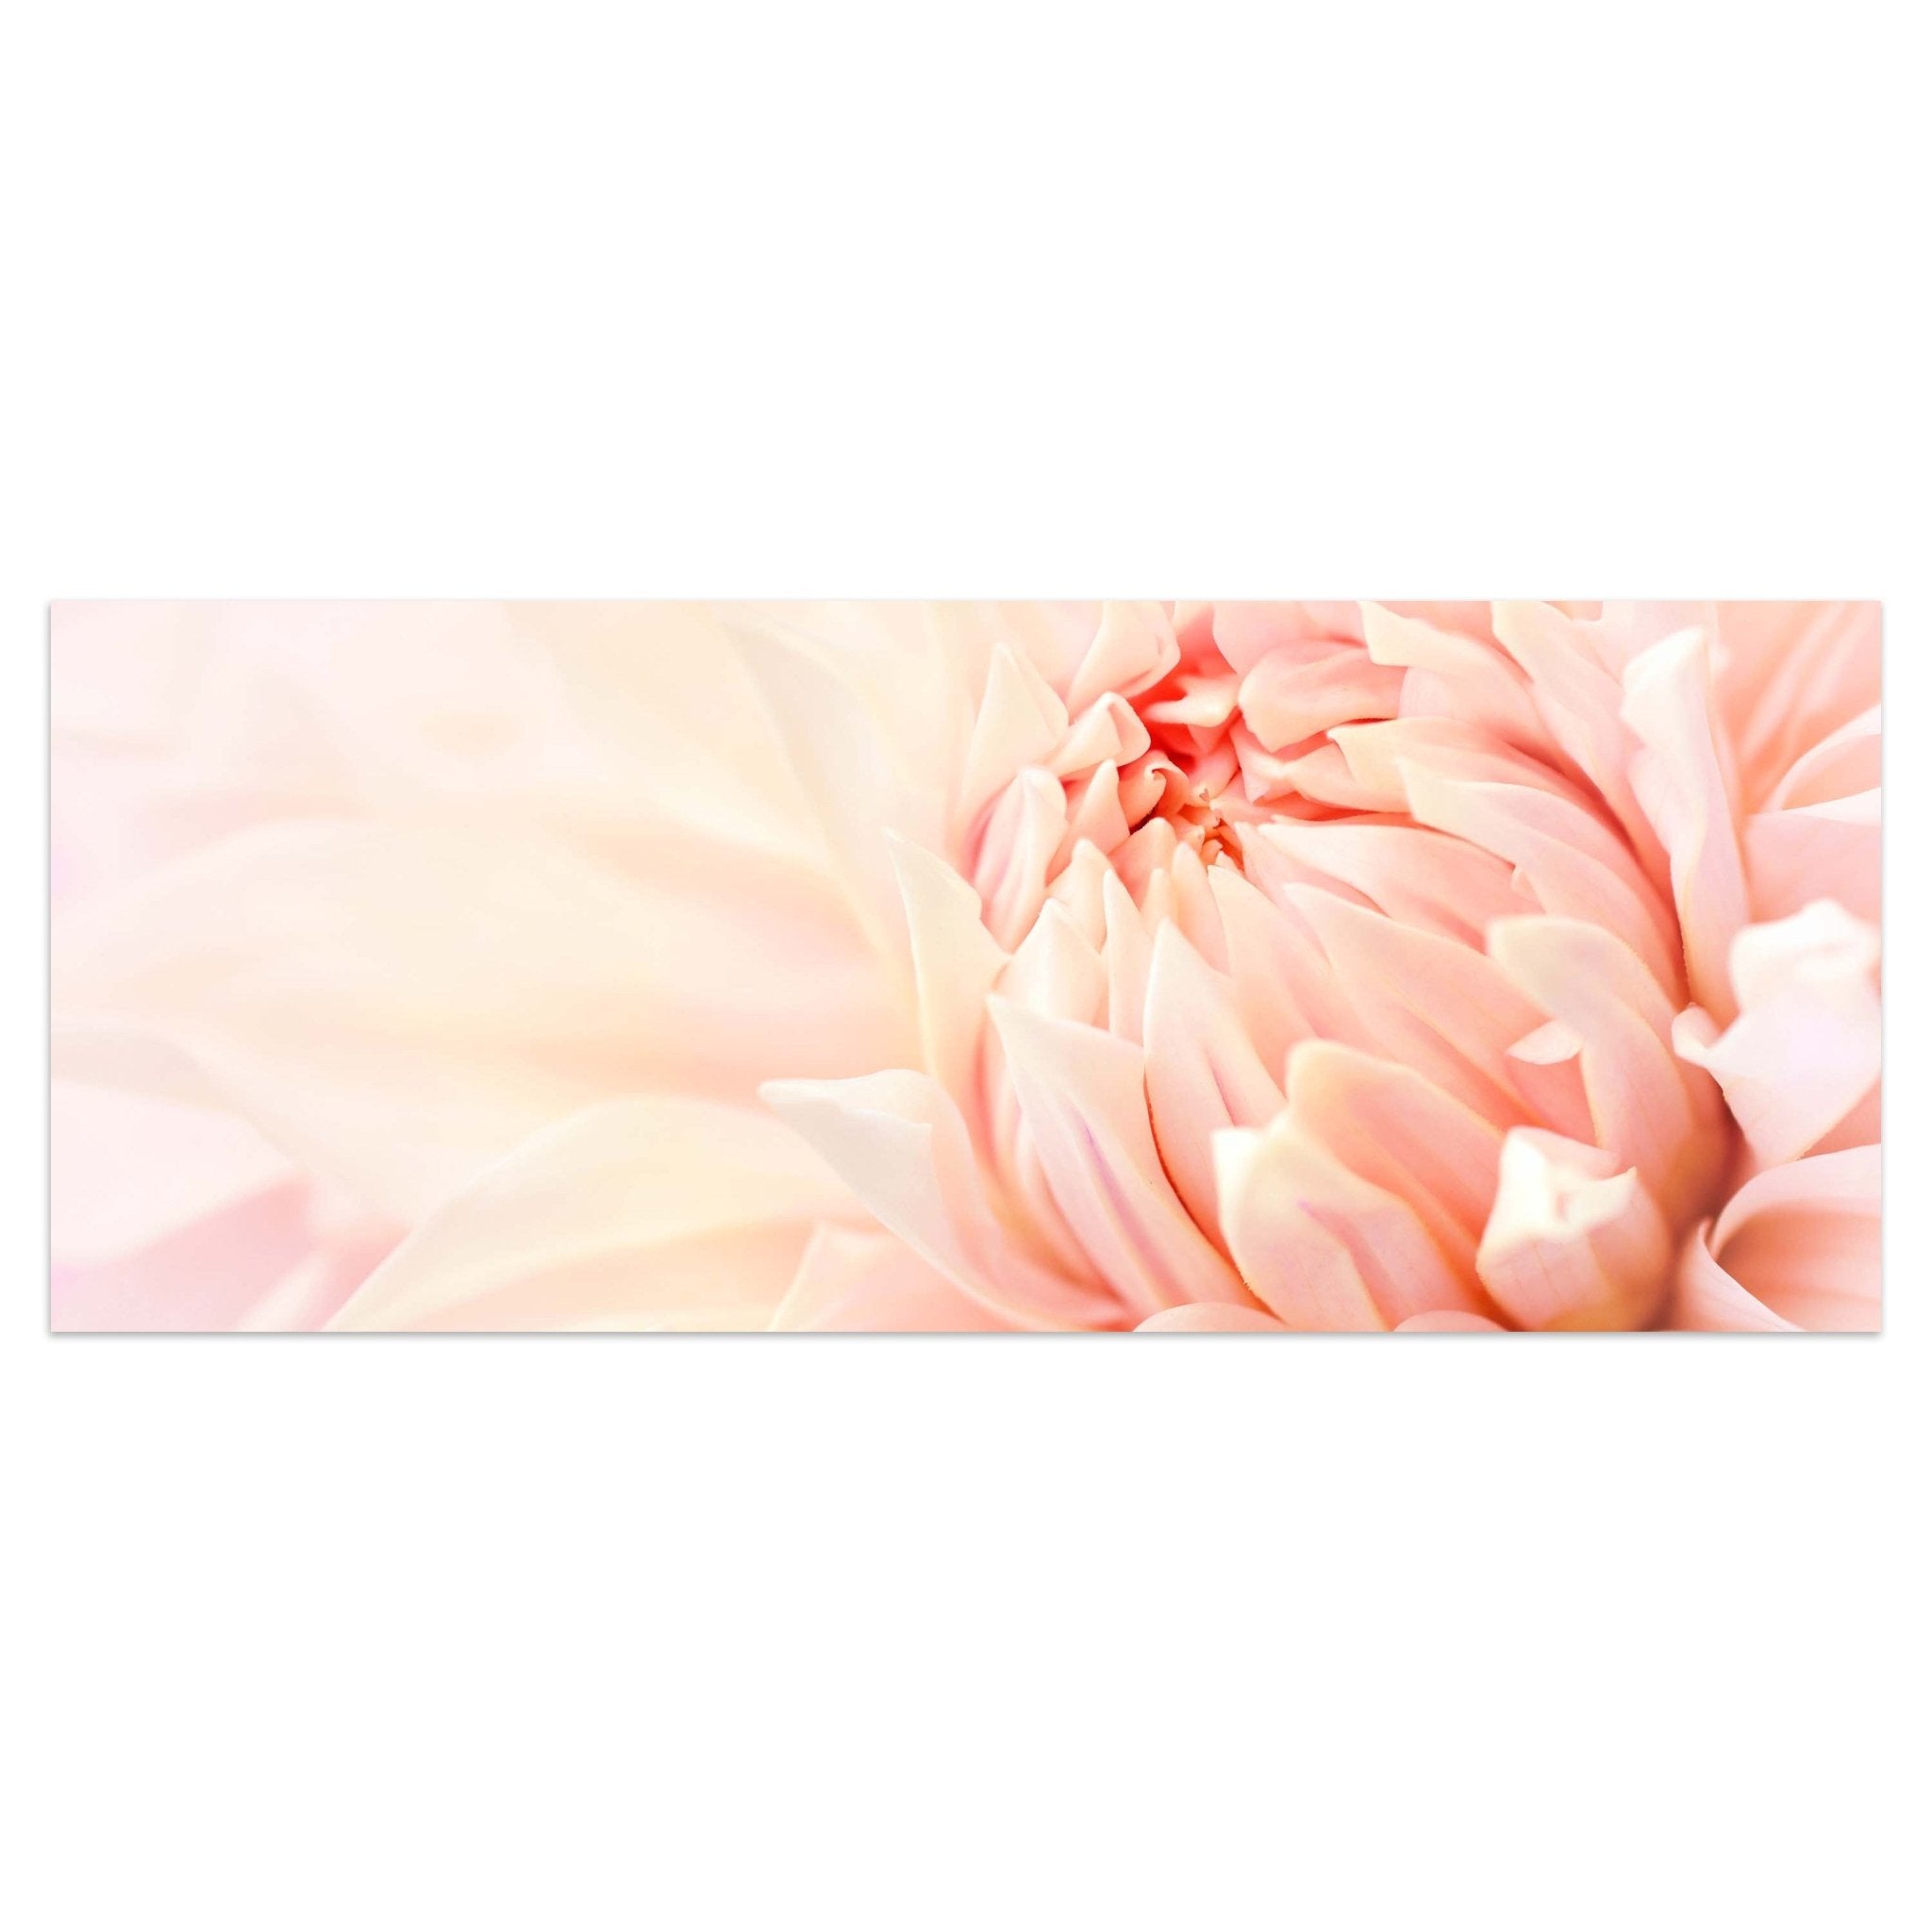 Leinwandbild Blume Blüte Dahlie rosa M1130 kaufen - Bild 1